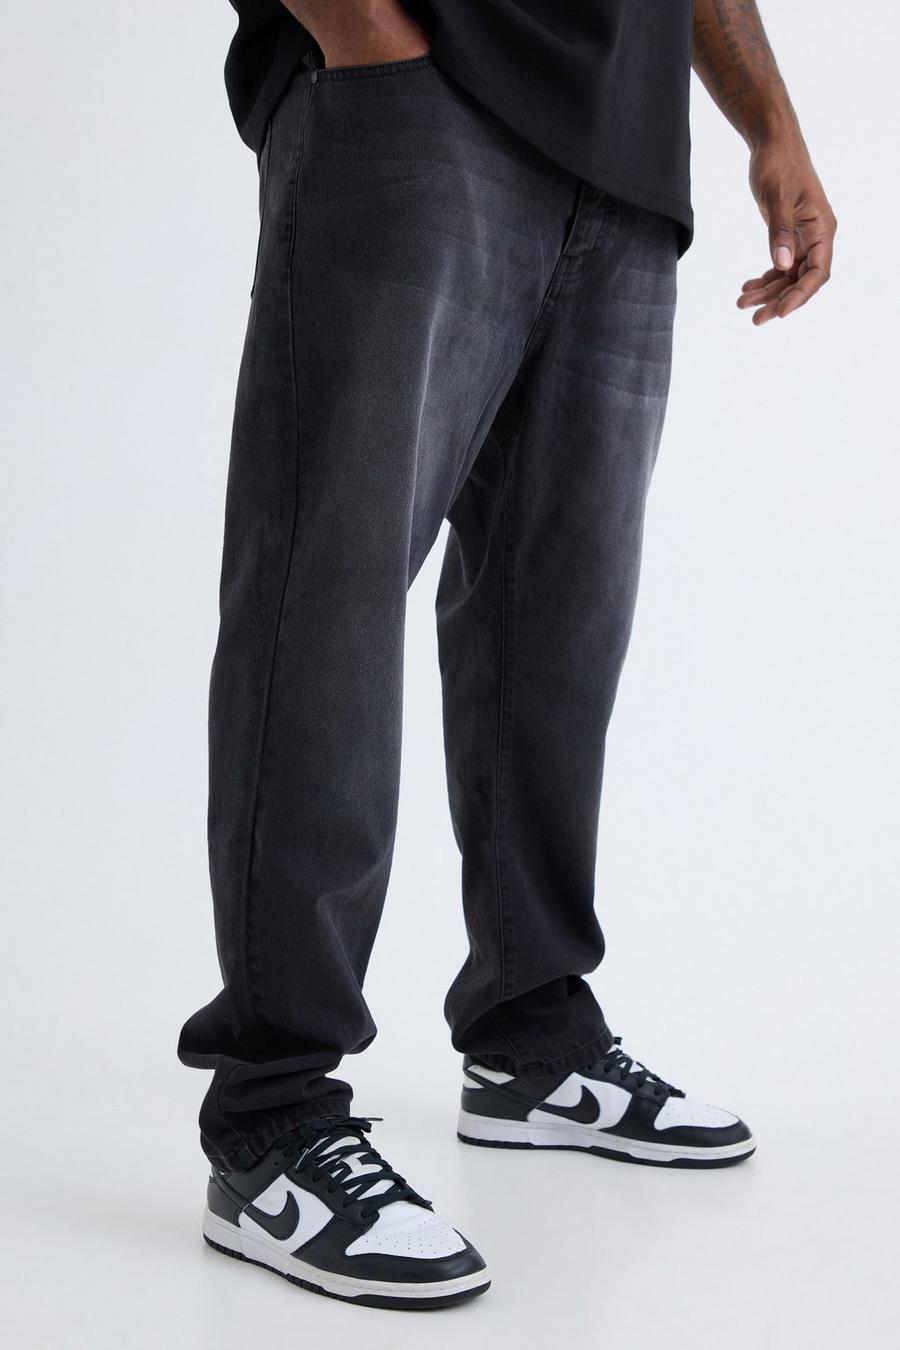 Jeans Plus Size Slim Fit in denim rigido, Washed black